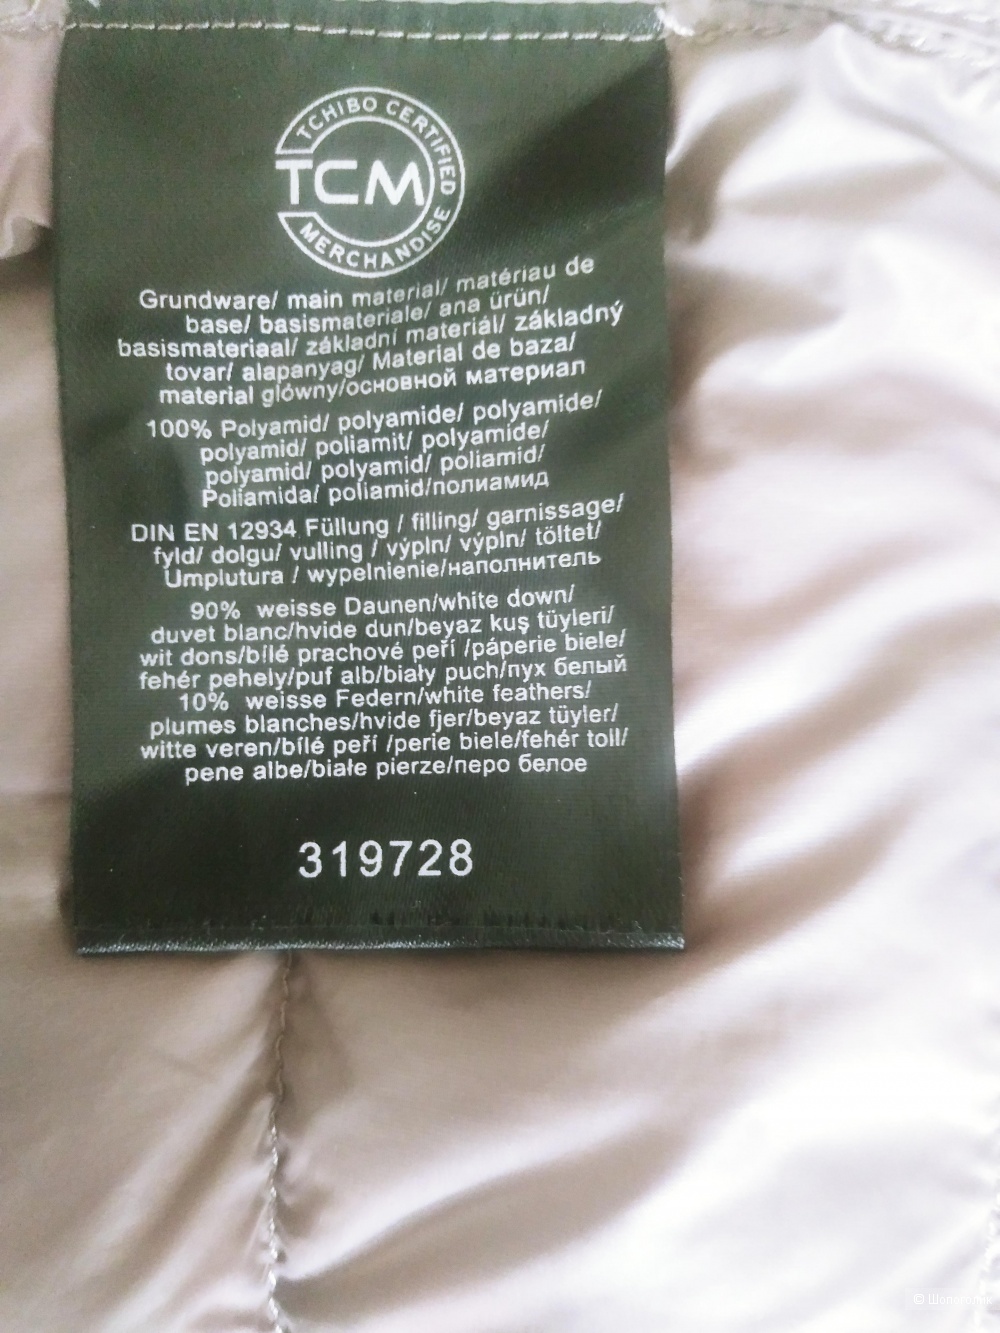 Пуховик "Tchibo certified merchandise", размер XL